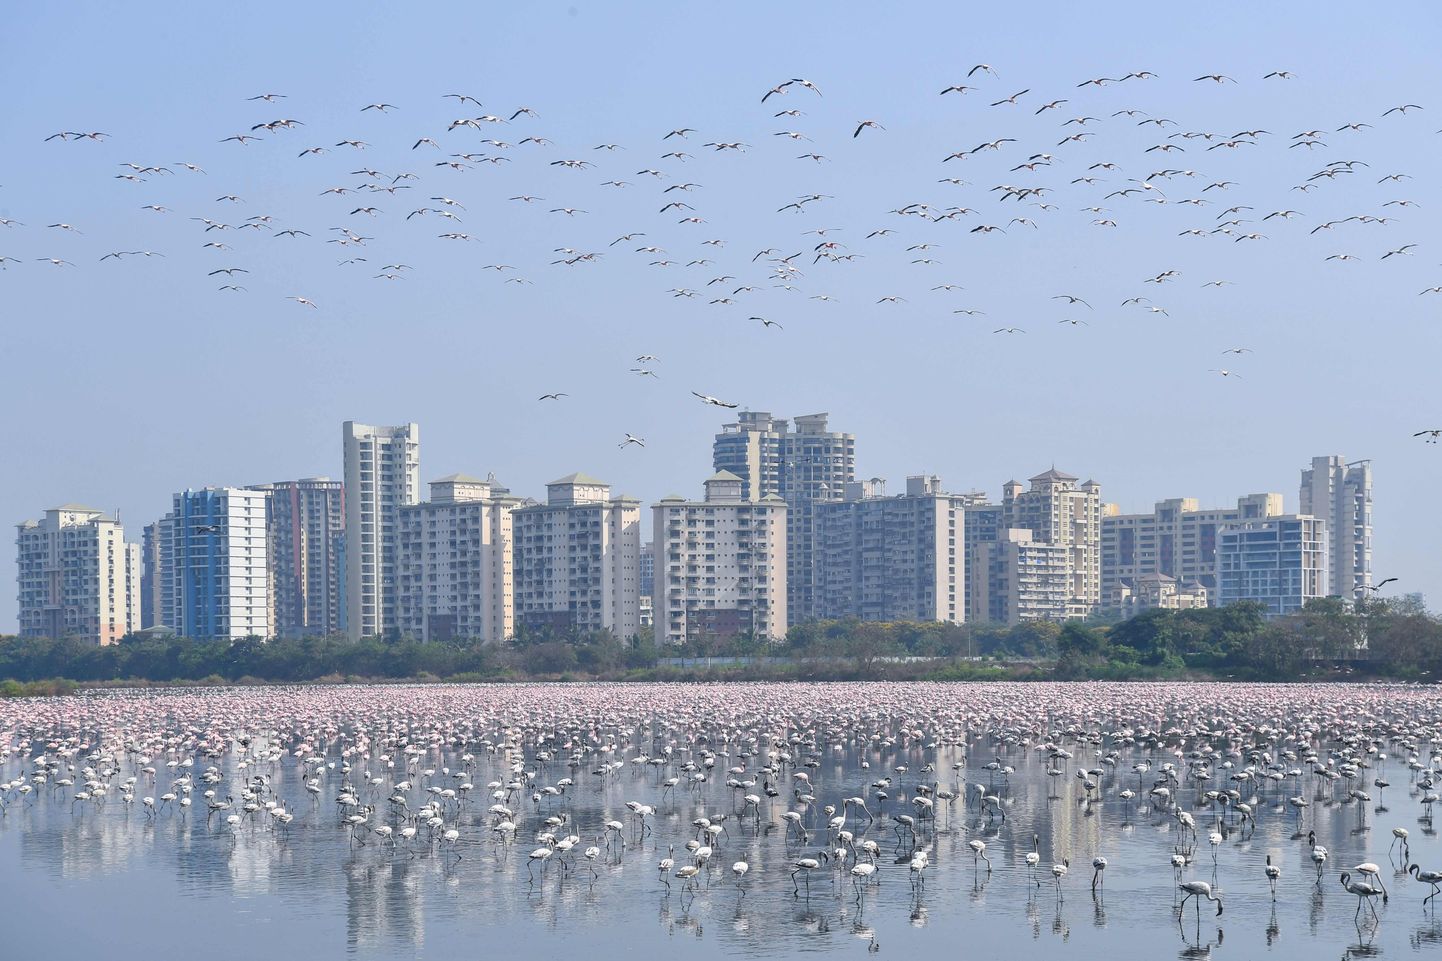 Flamingo Indijas lokdauna laikā